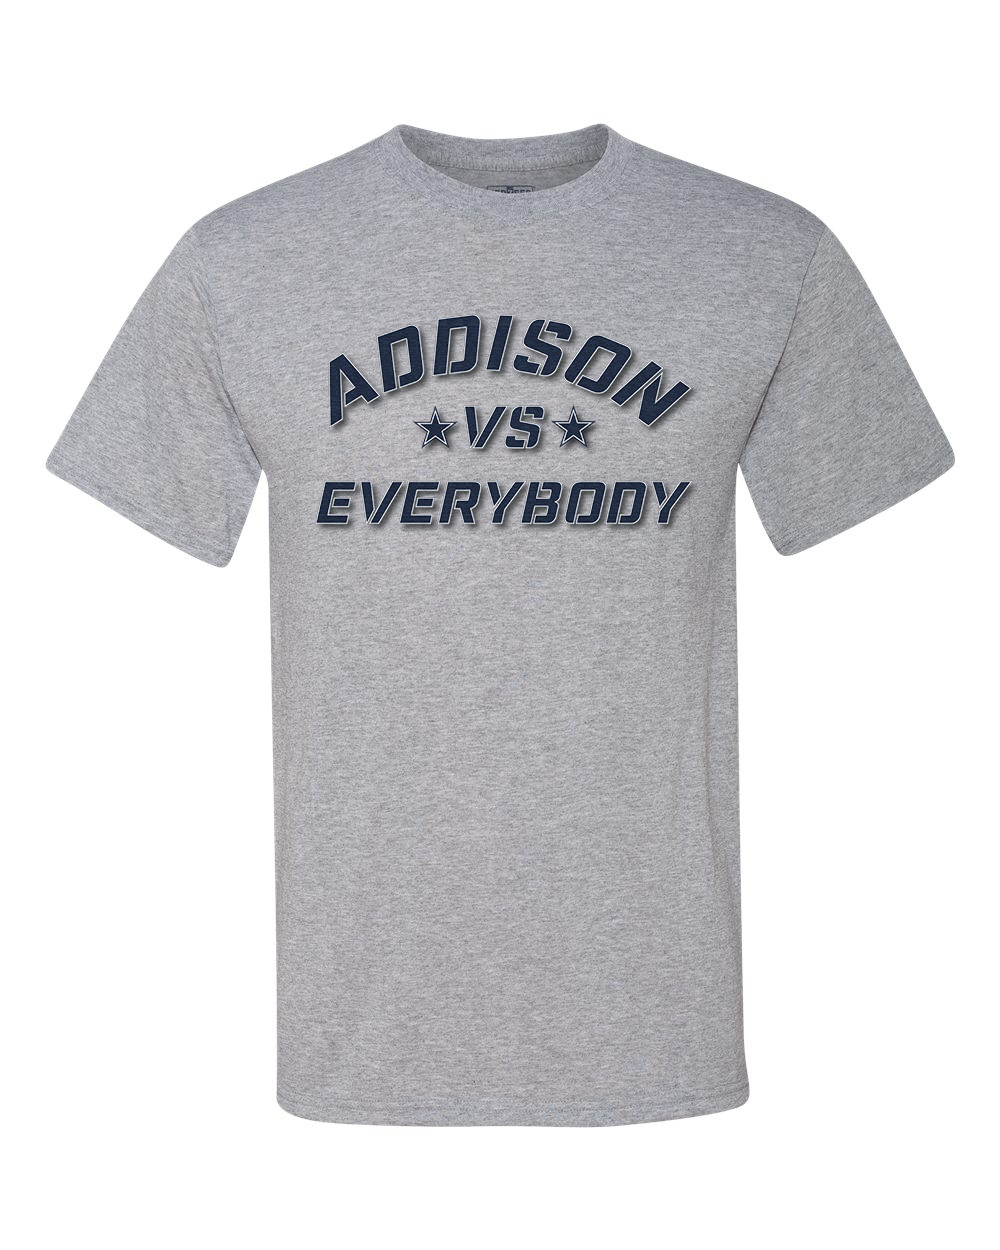 Addison VS Everybody - T-shirt - ADULT